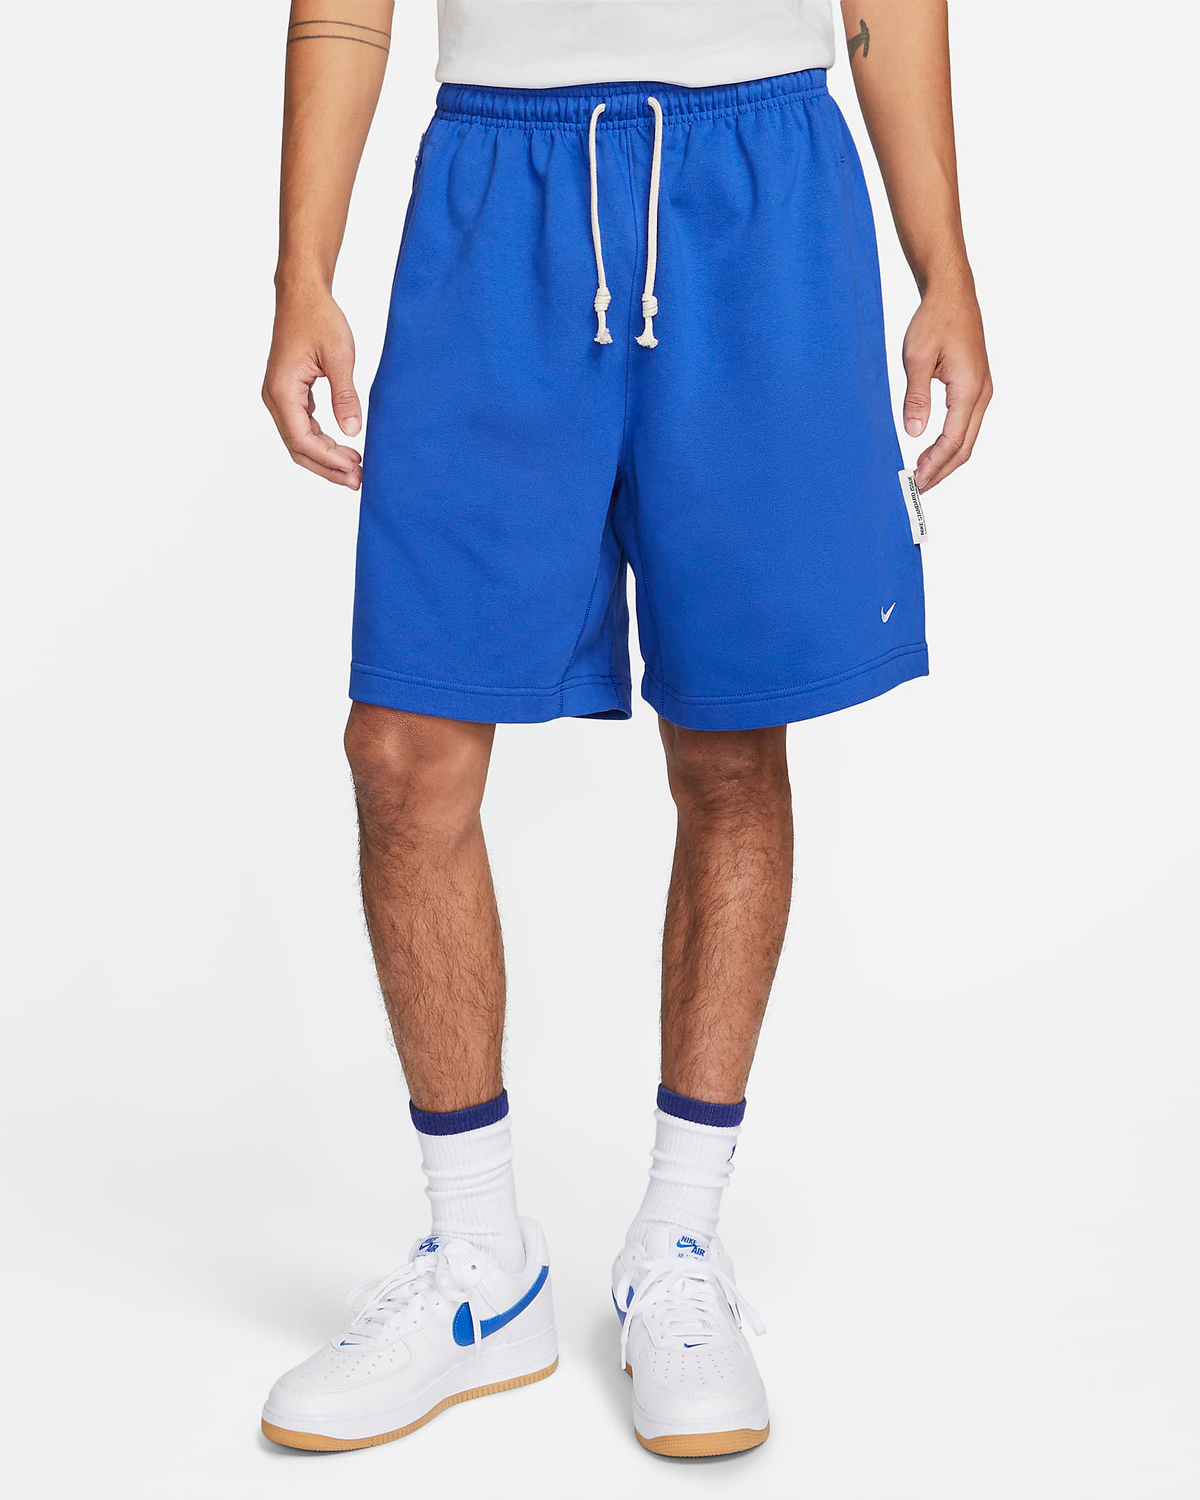 Nike-Standard-Issue-Shorts-Royal-Blue